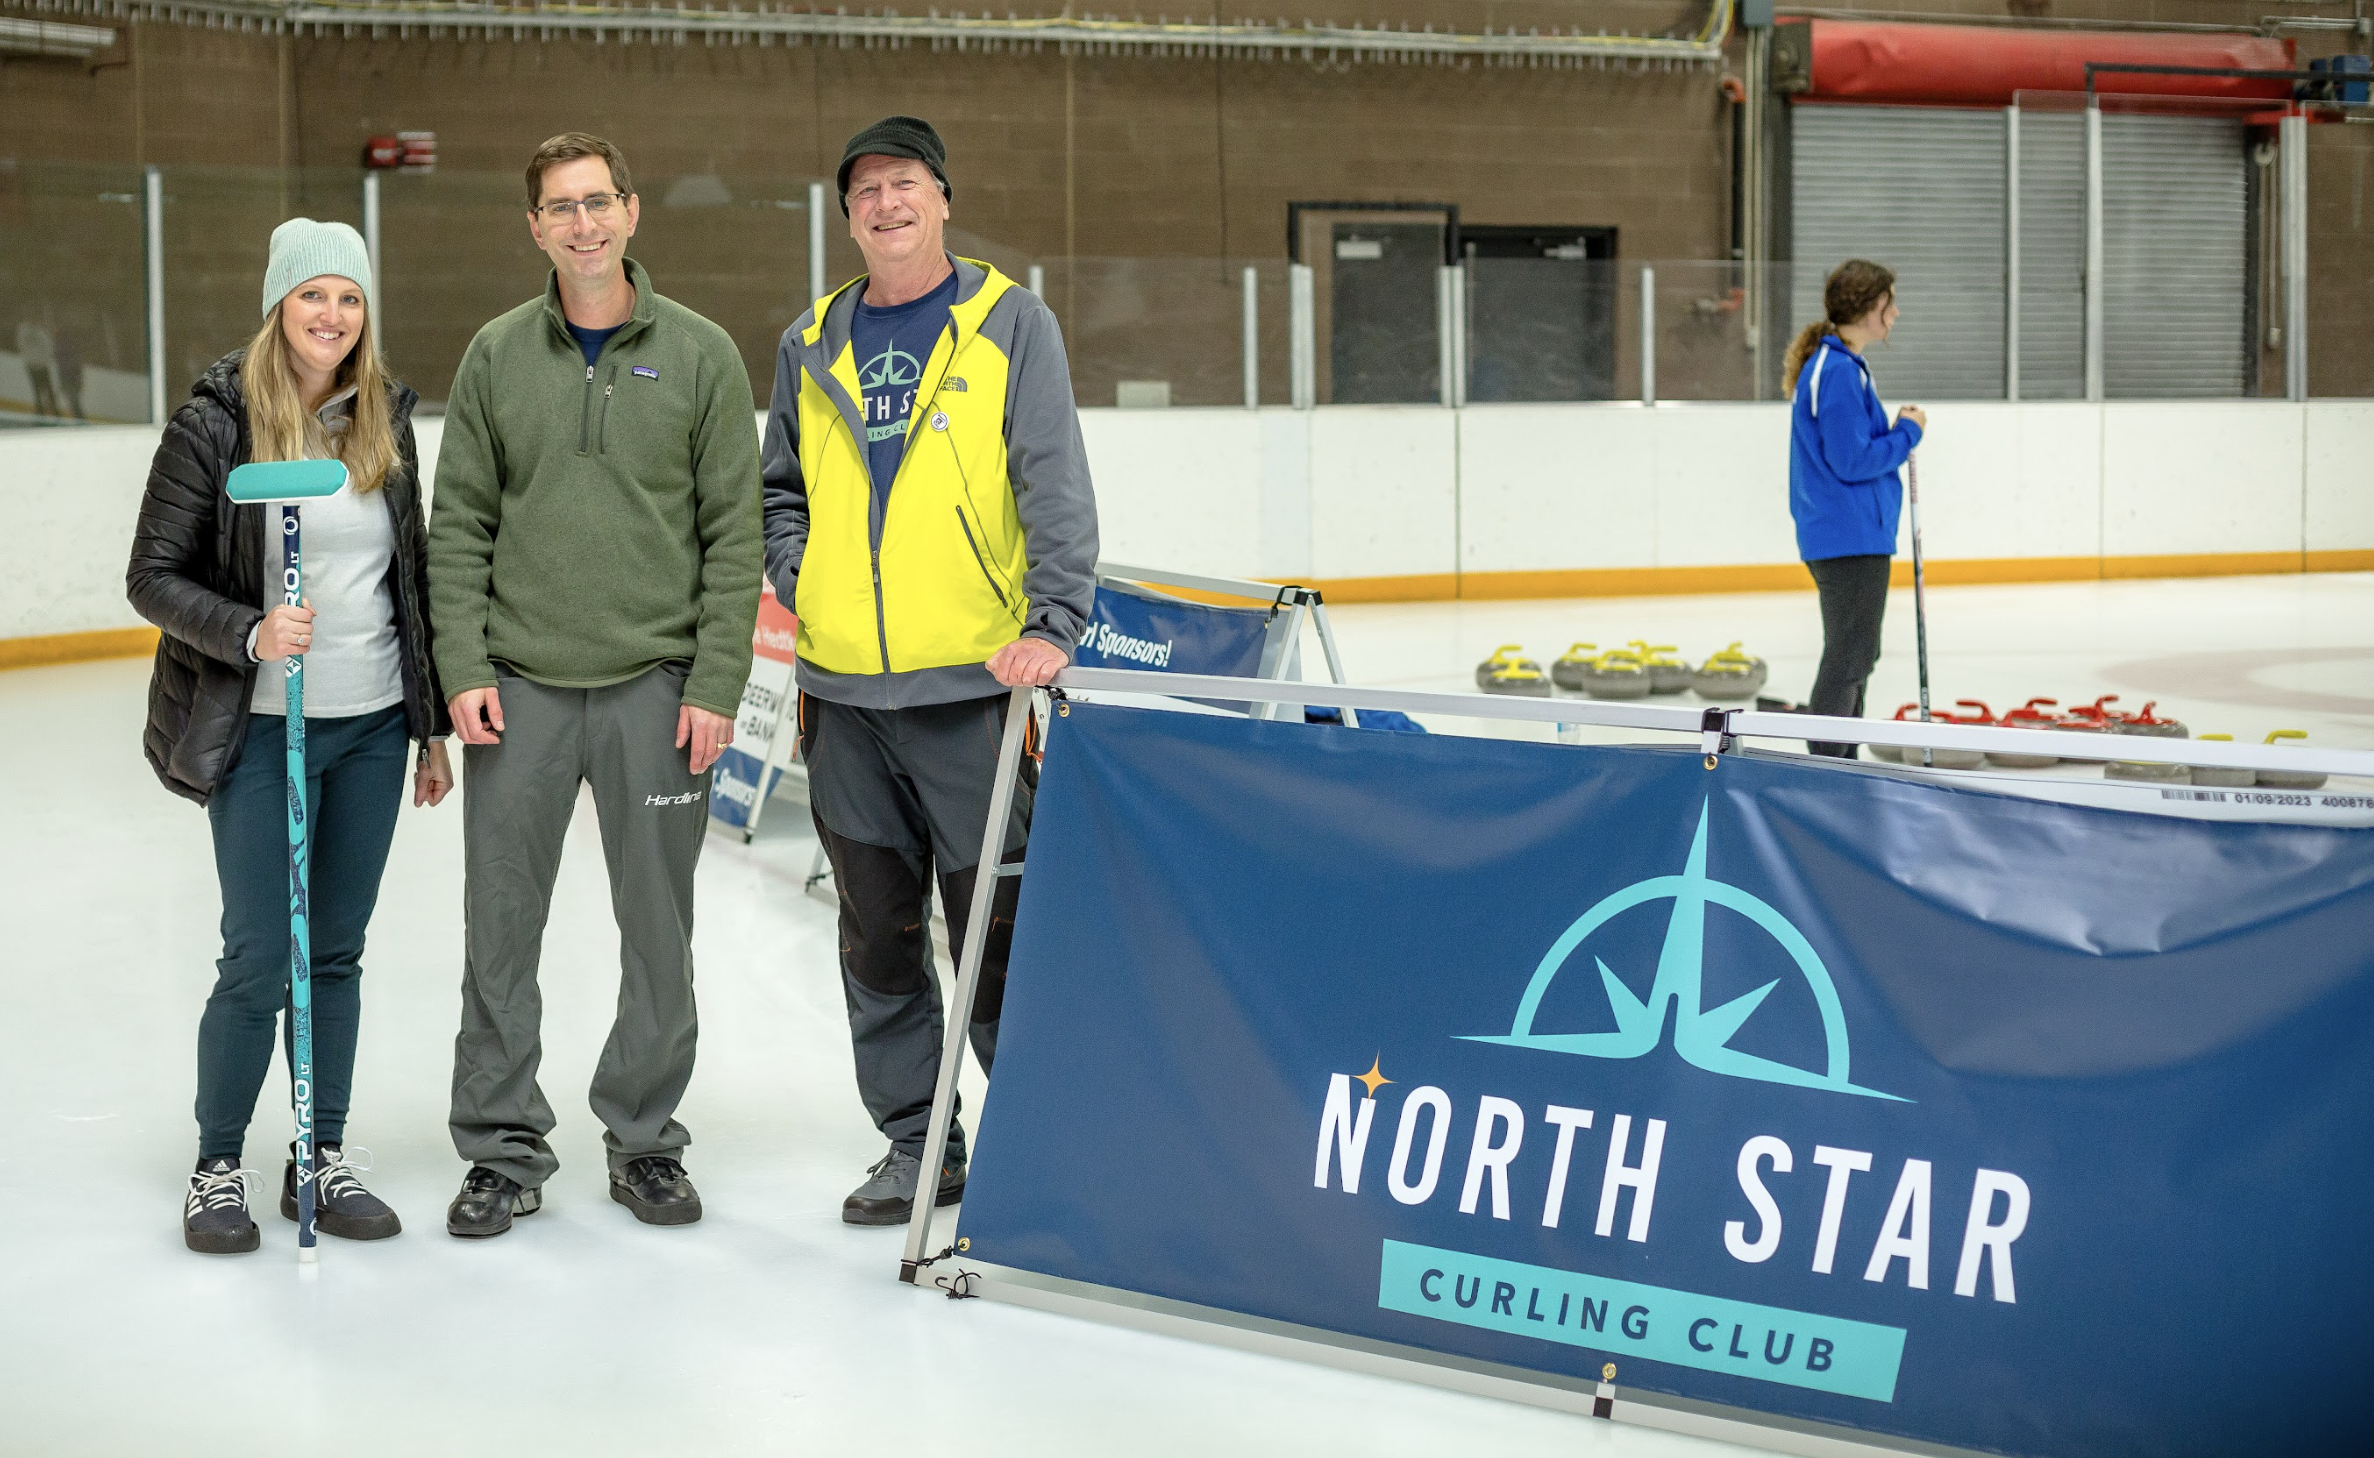 north start curling club st cloud